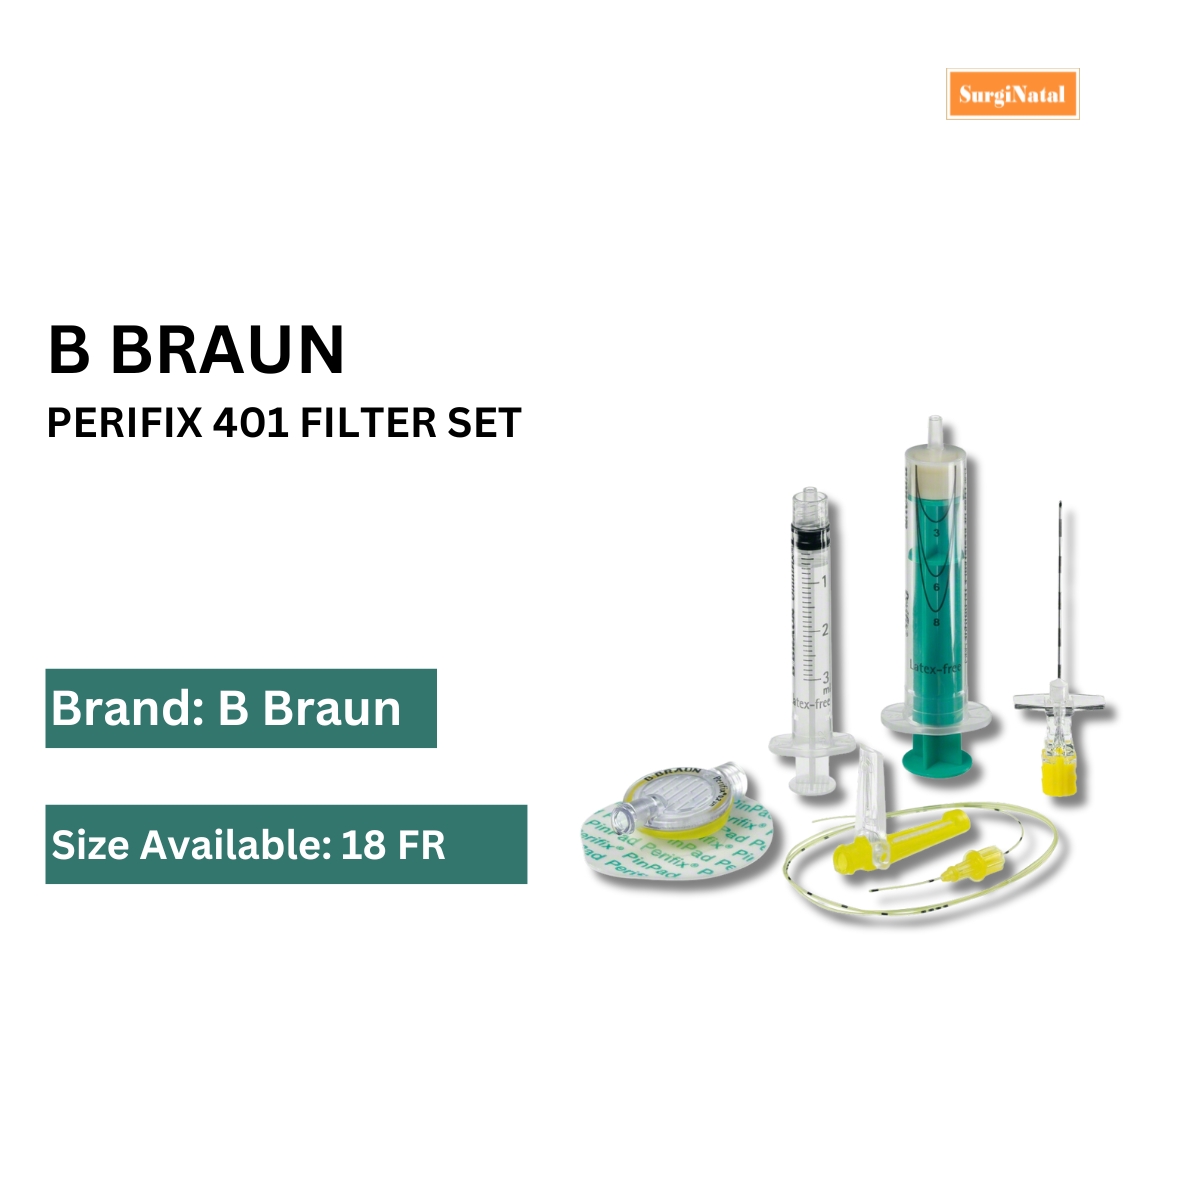  buy b braun perifix 401 filter set